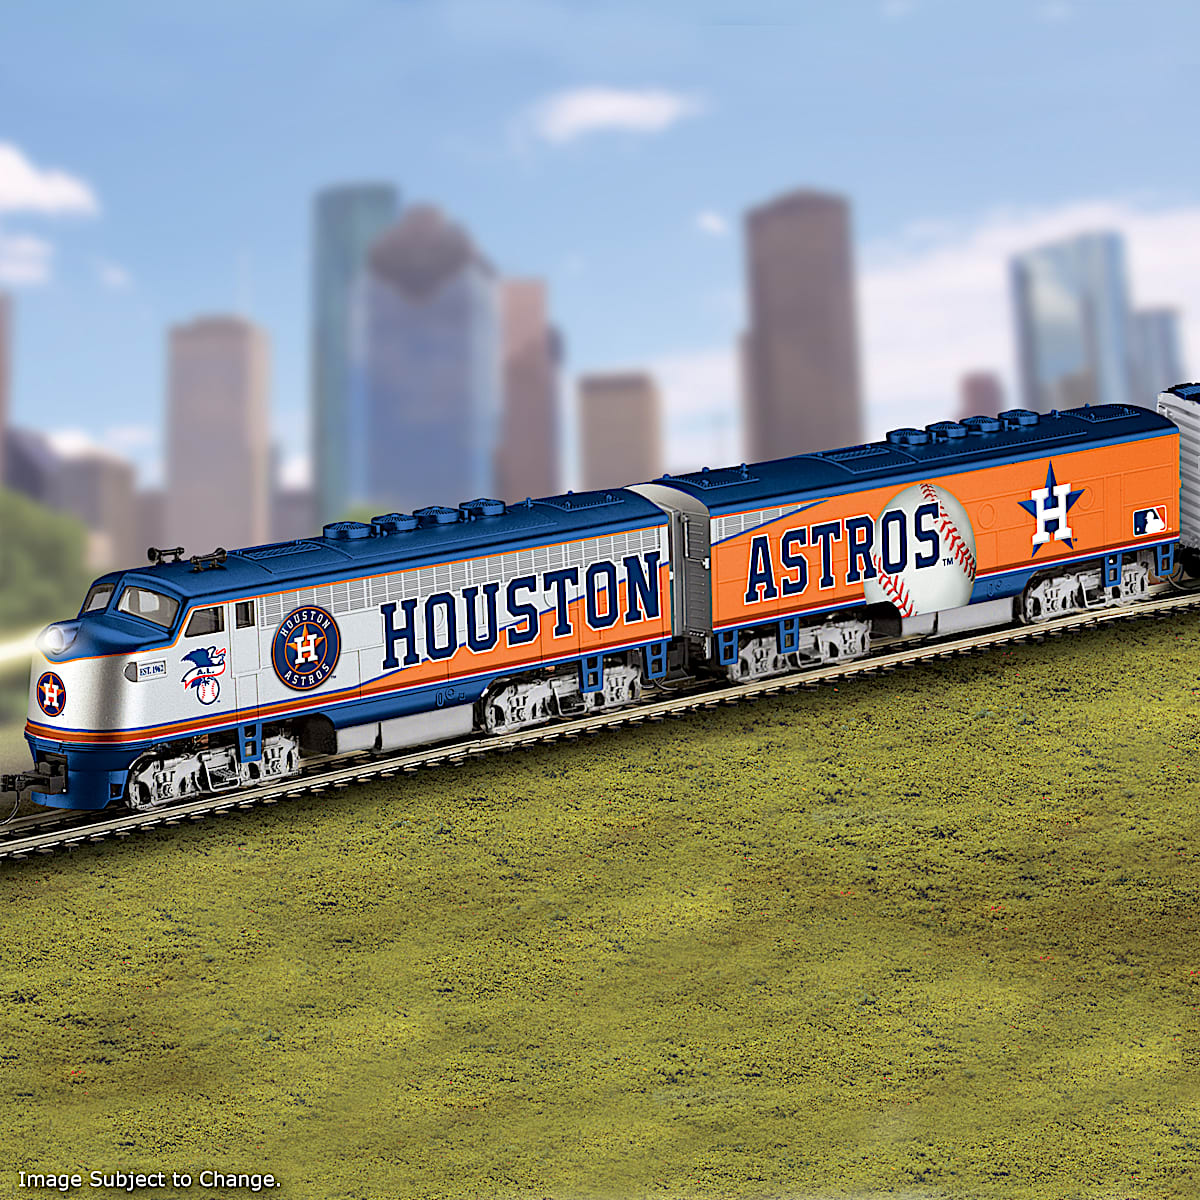 Houston Astros Gear - RICE VILLAGE HOUSTON